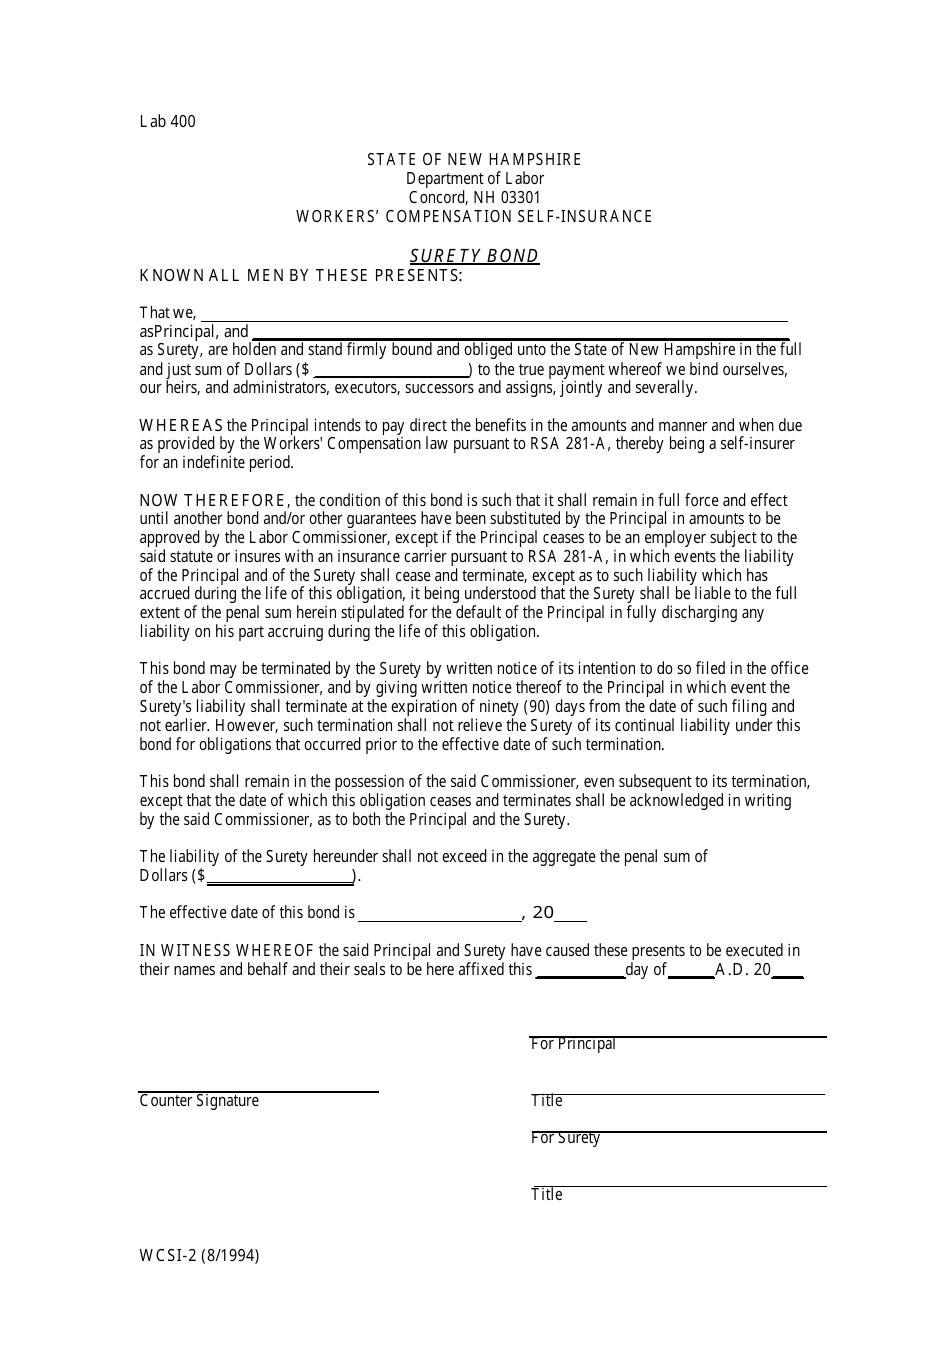 Form WCSI-2 Self-insurance Surety Bond - New Hampshire, Page 1